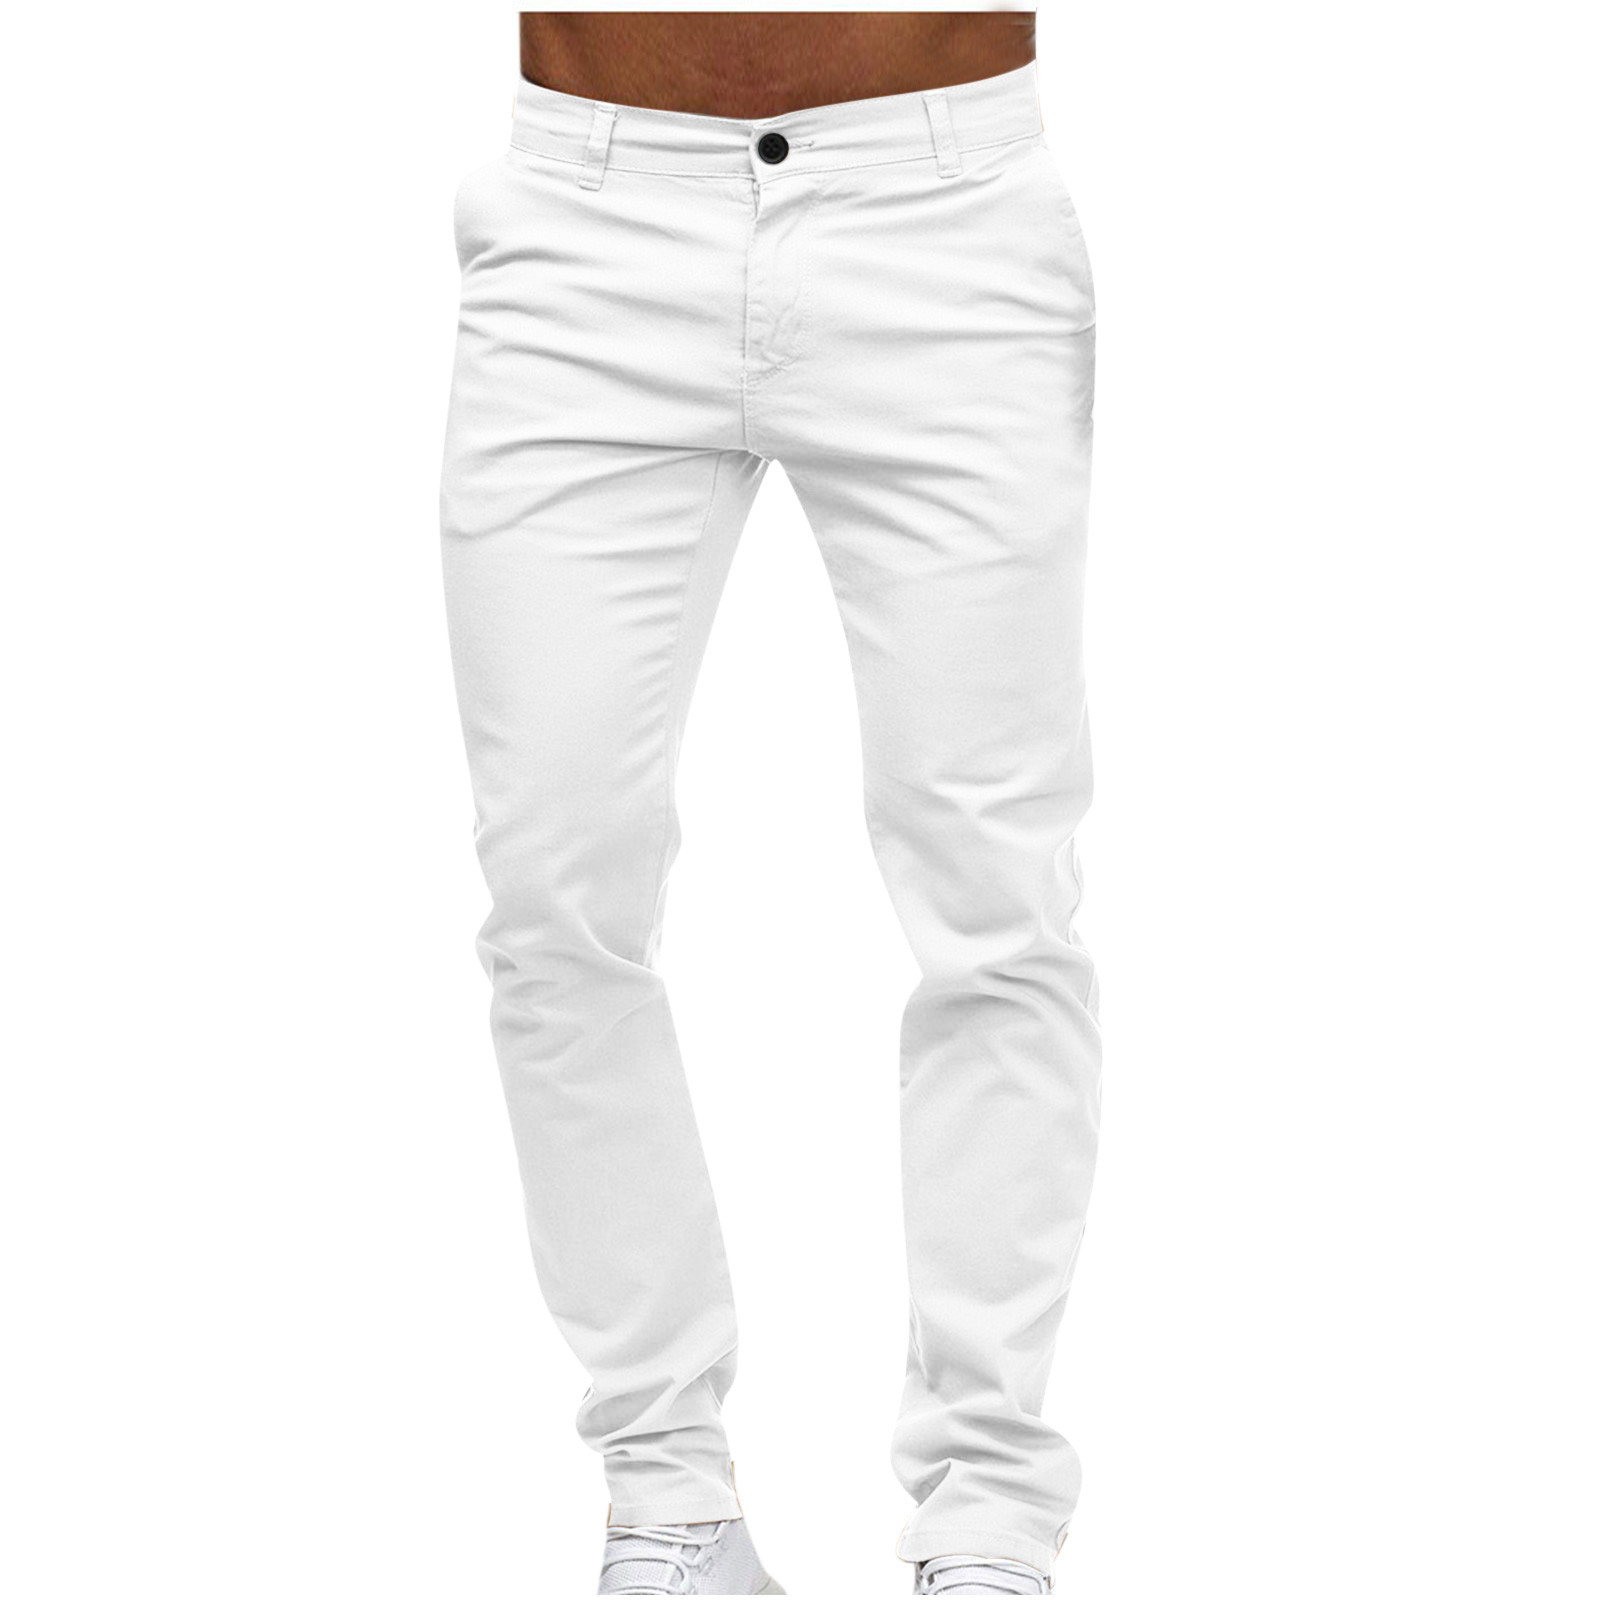 DeHolifer Mens Casual Chinos Pants Cotton Slacks Elastic Waistband Classic Fit Flat Front Khaki Pant White 4XL - image 1 of 5